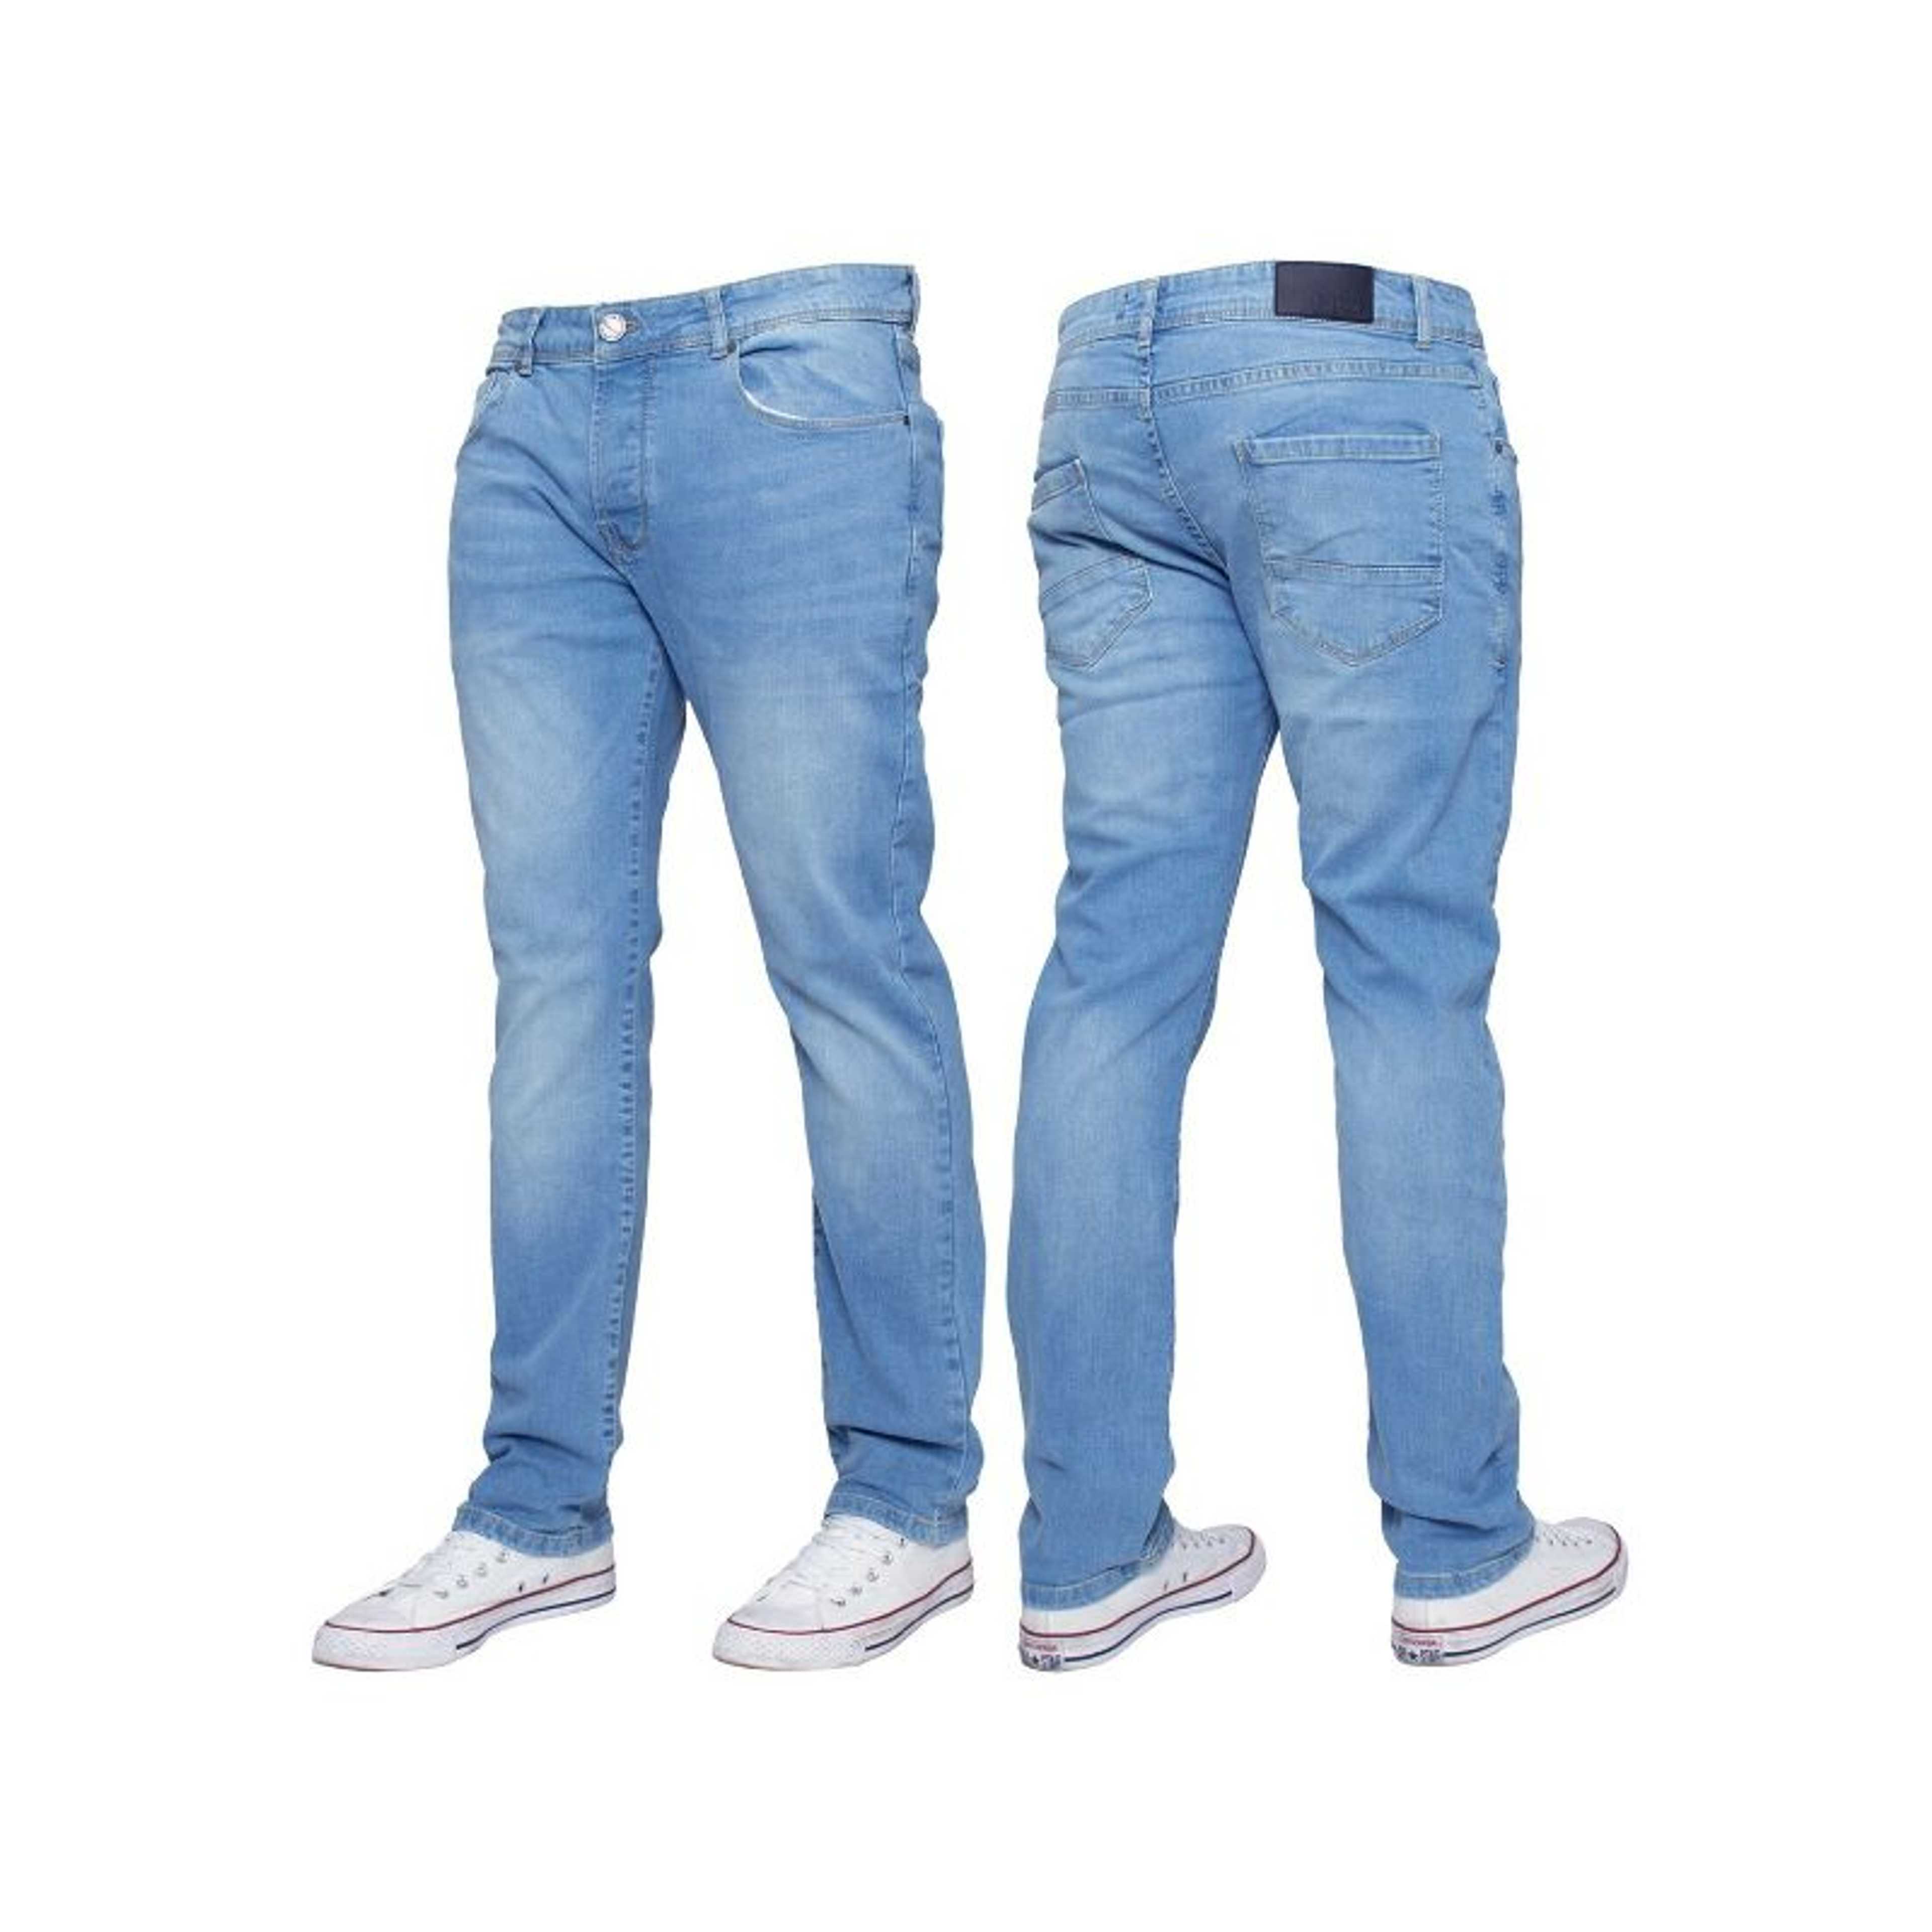 Rubahas Men’s Skinny Denim Jeans Pant in Sky Blue Color